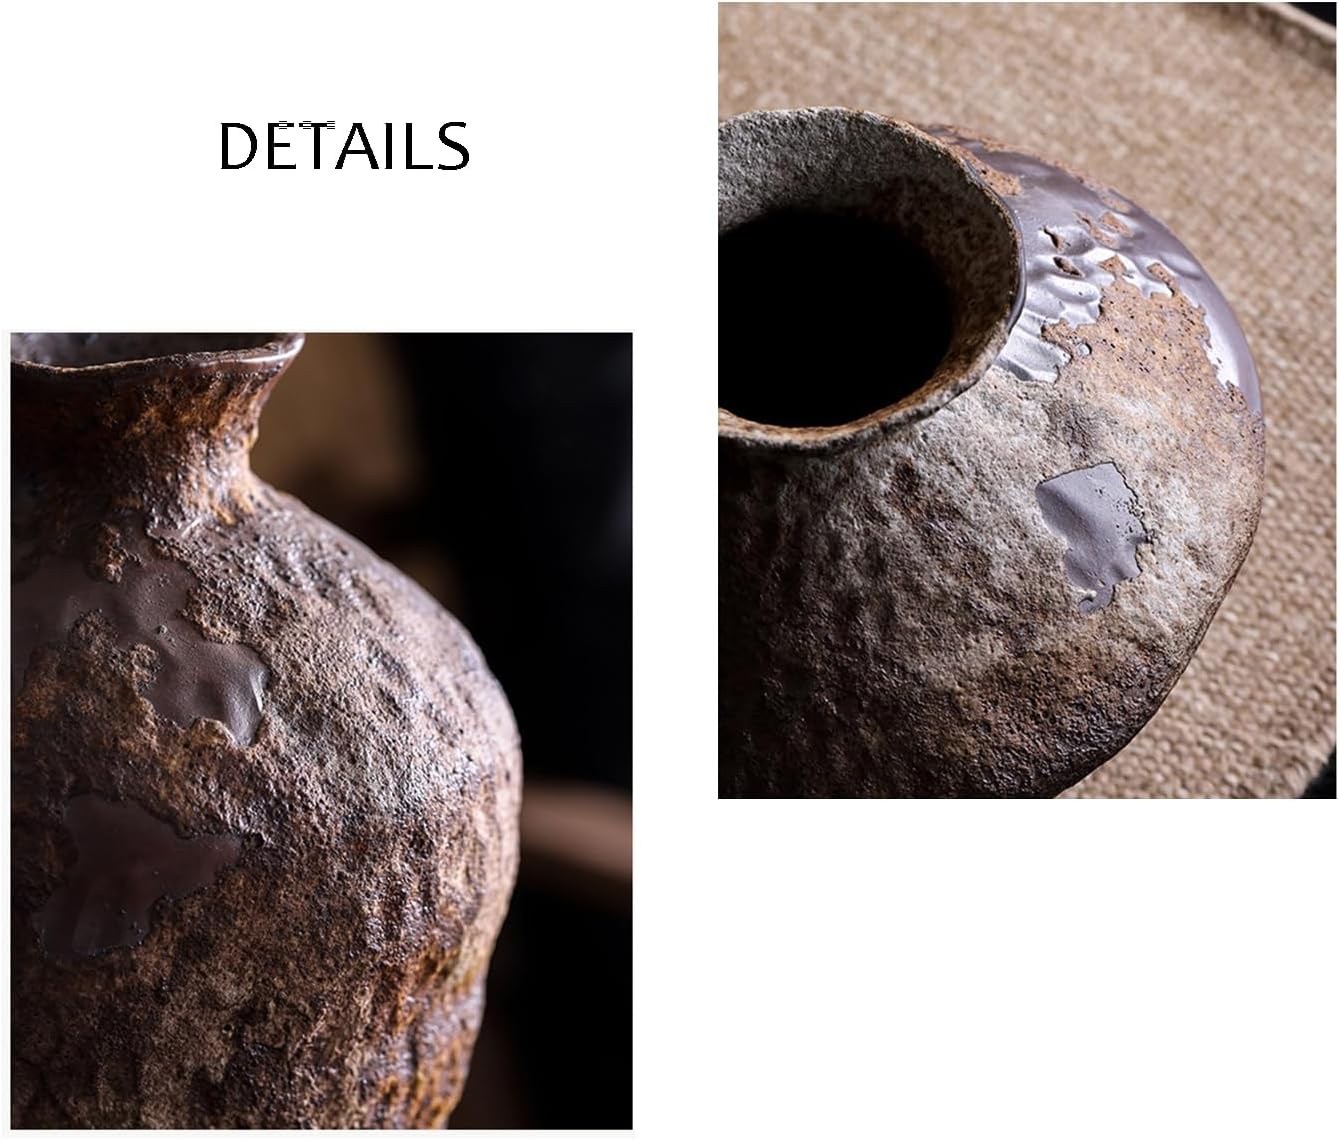 Ceramic Rustic Farmhouse Vase, Pottery Flower Vase for Centerpieces, Decorative Vase for Table, Living Room, Bedroom, Bathroom